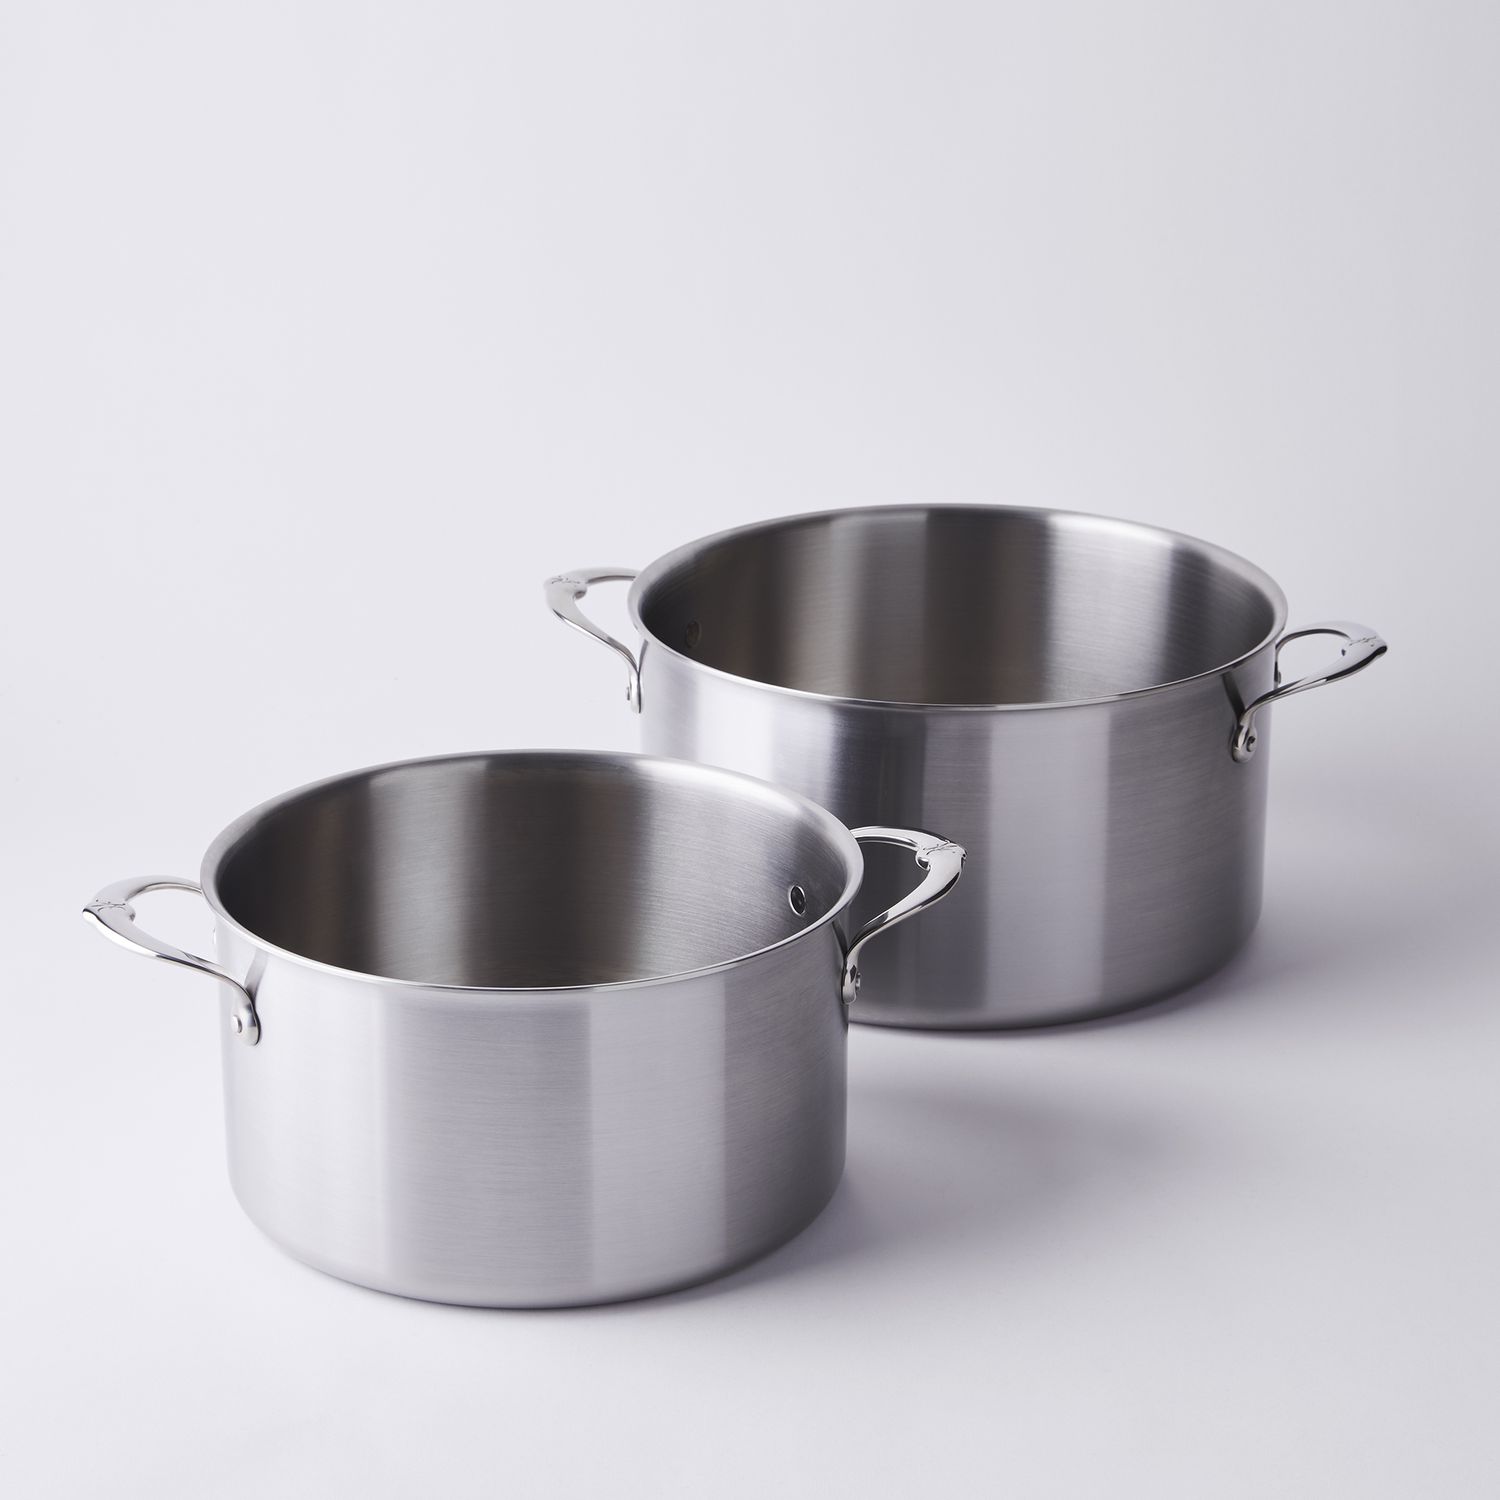 Thomas Keller Insignia Stainless Steel Stock Pot, 2 Sizes on Food52